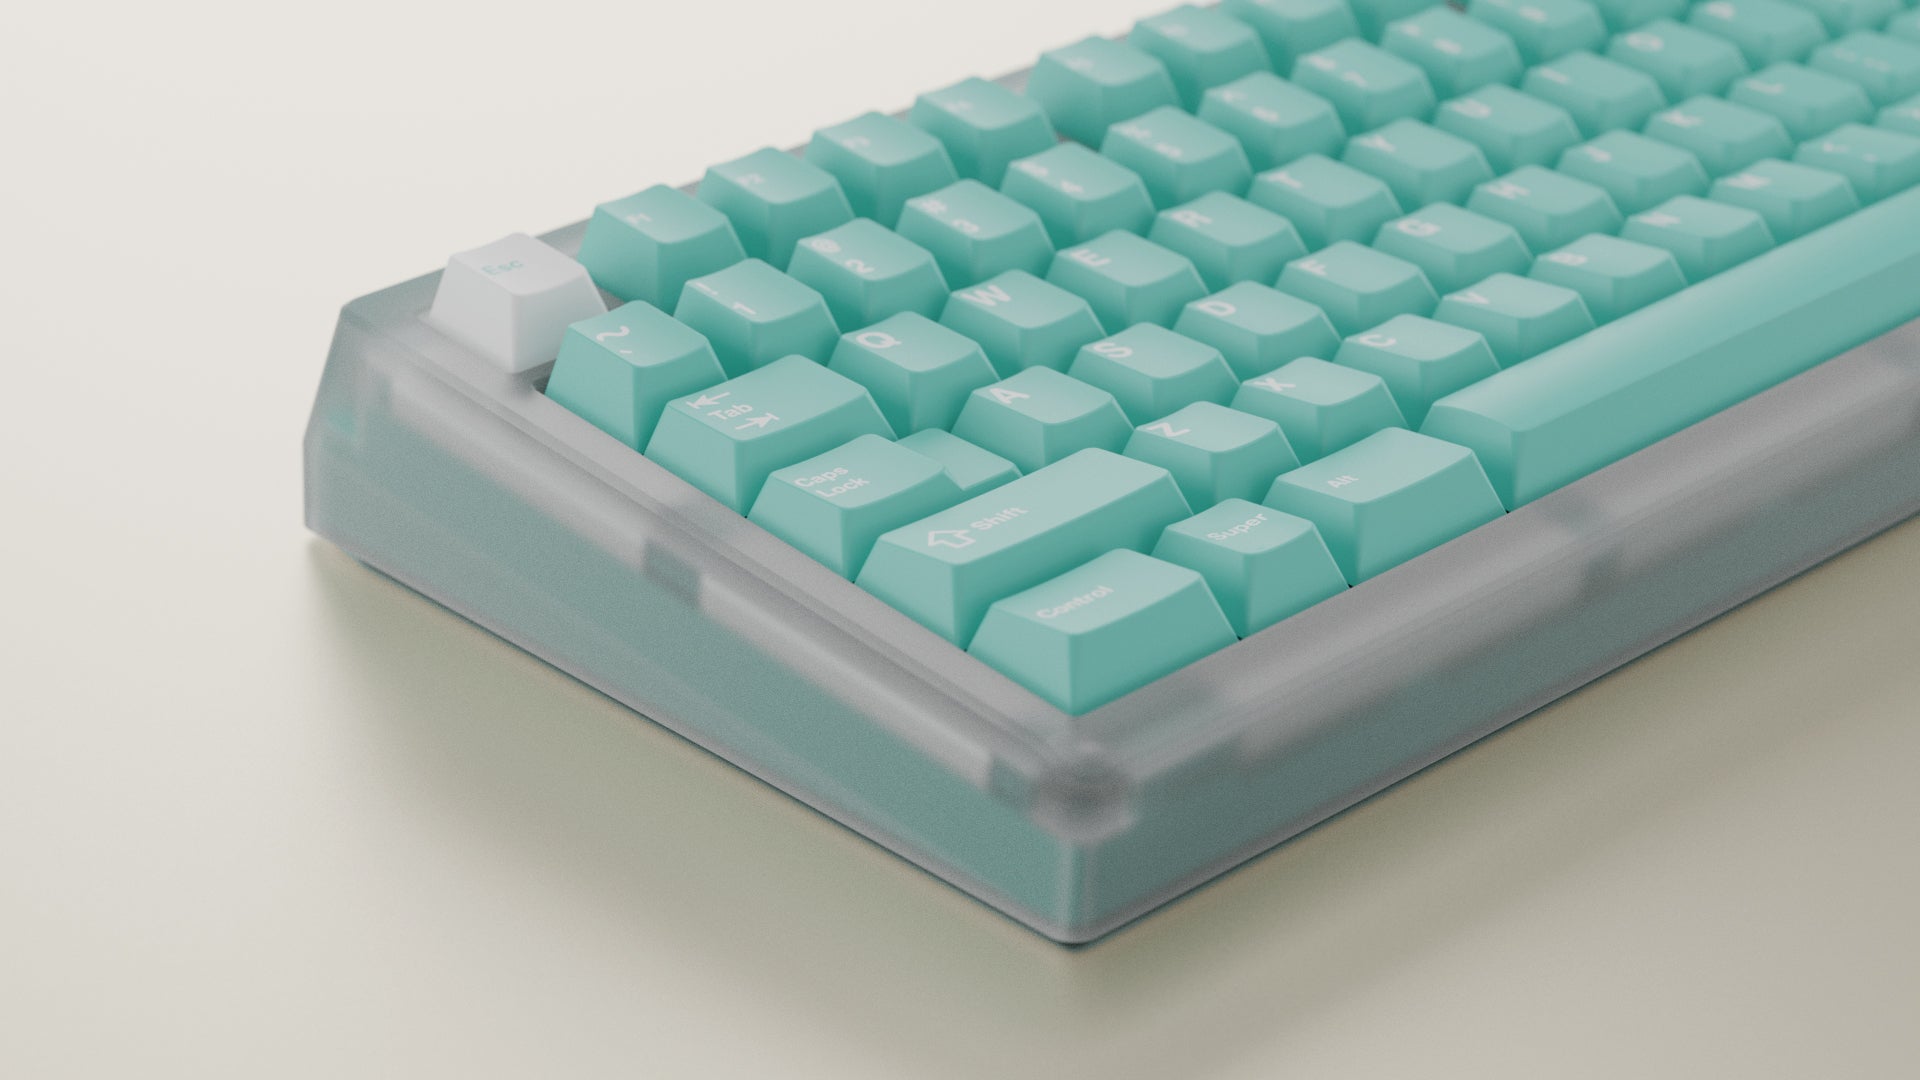 Zoom75 x Akuamarin Edition Keyboard [Group Buy]